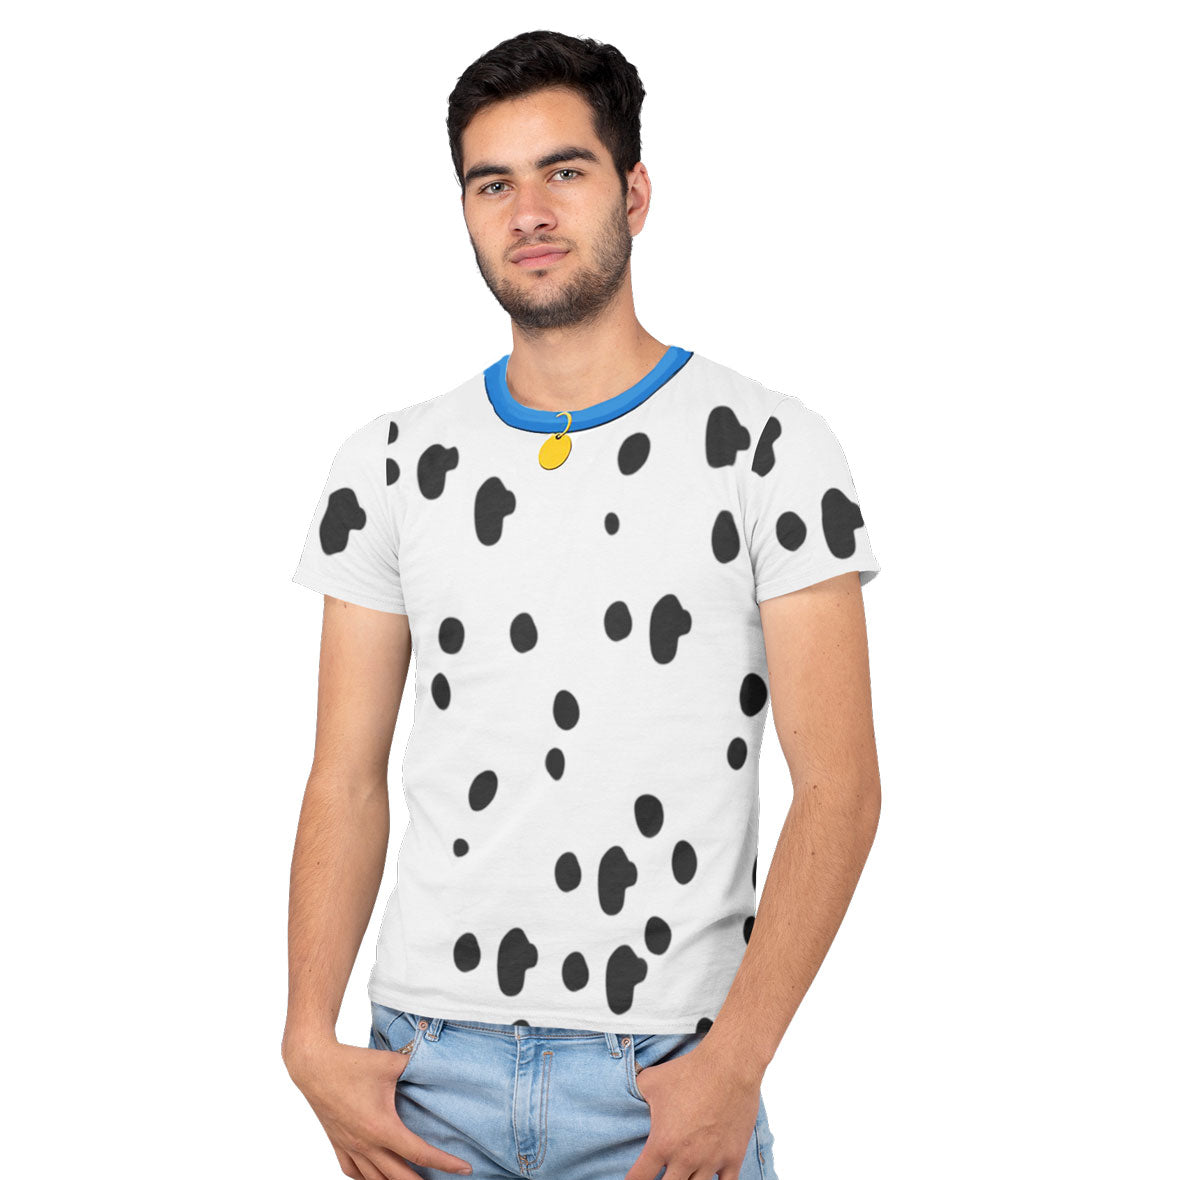 Pretend Im a Dalmatian shirt - Kingteeshop